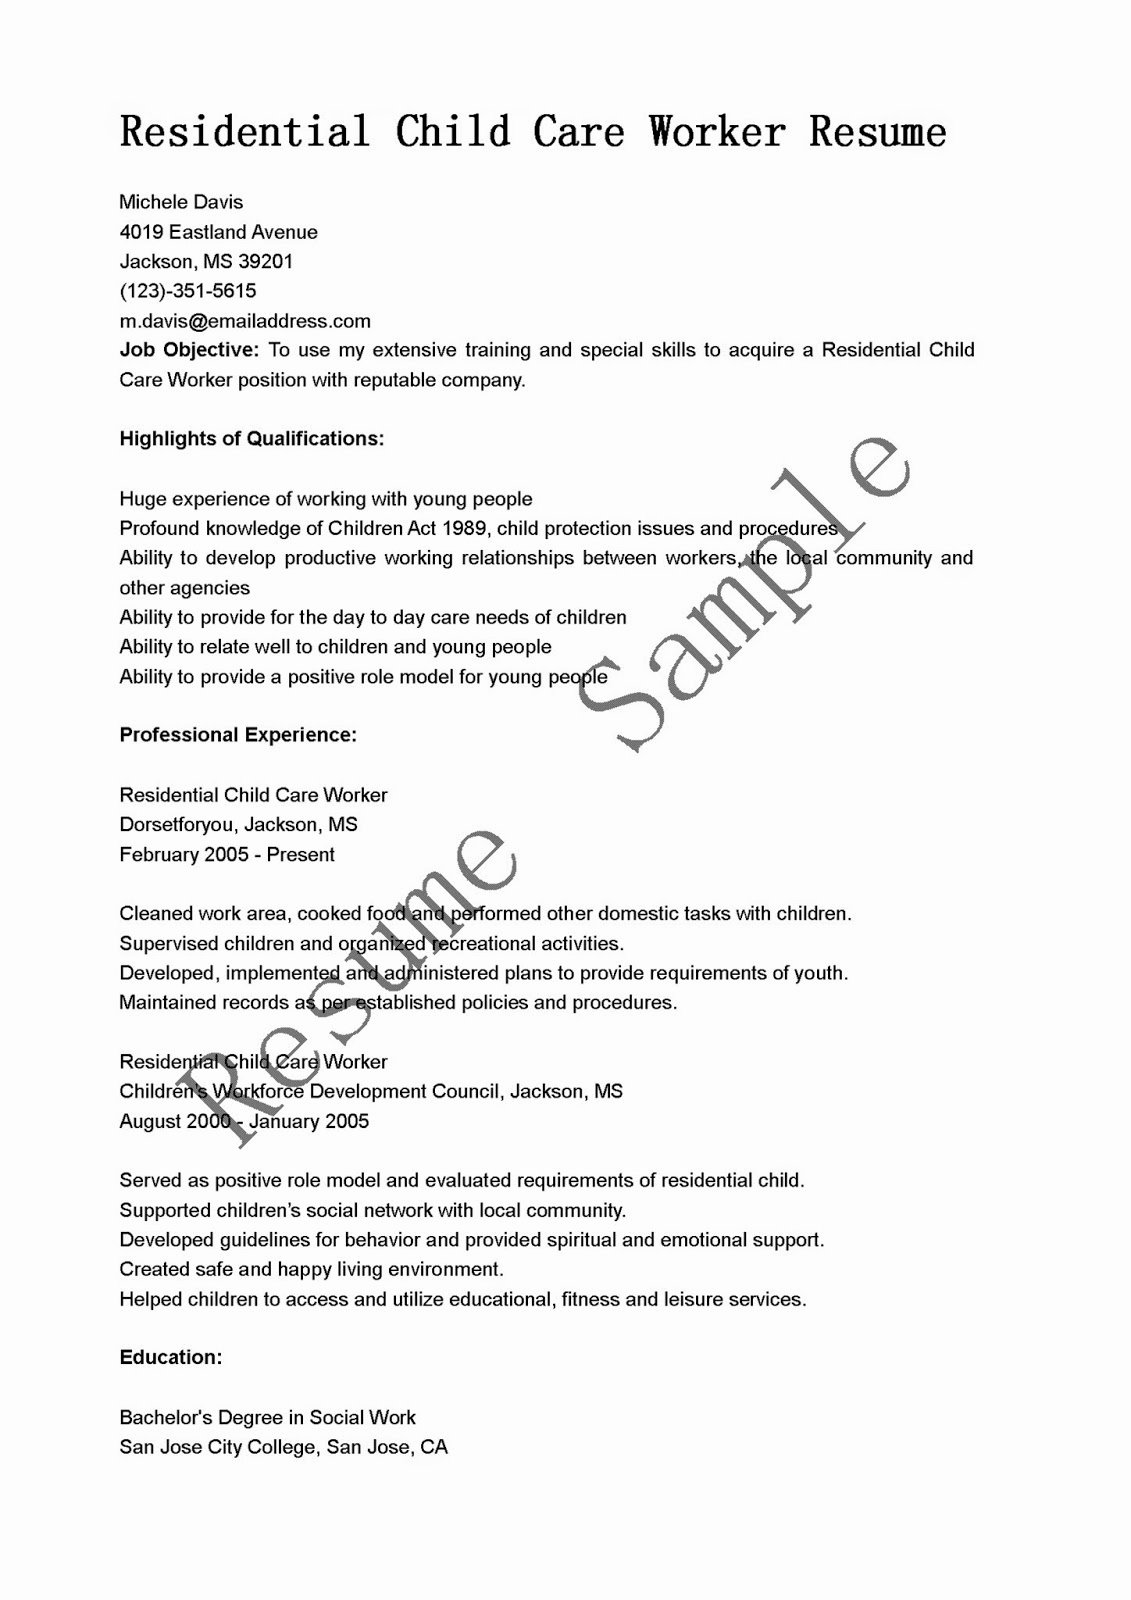 Resume Samples Residential Child Care Worker Resume Sample